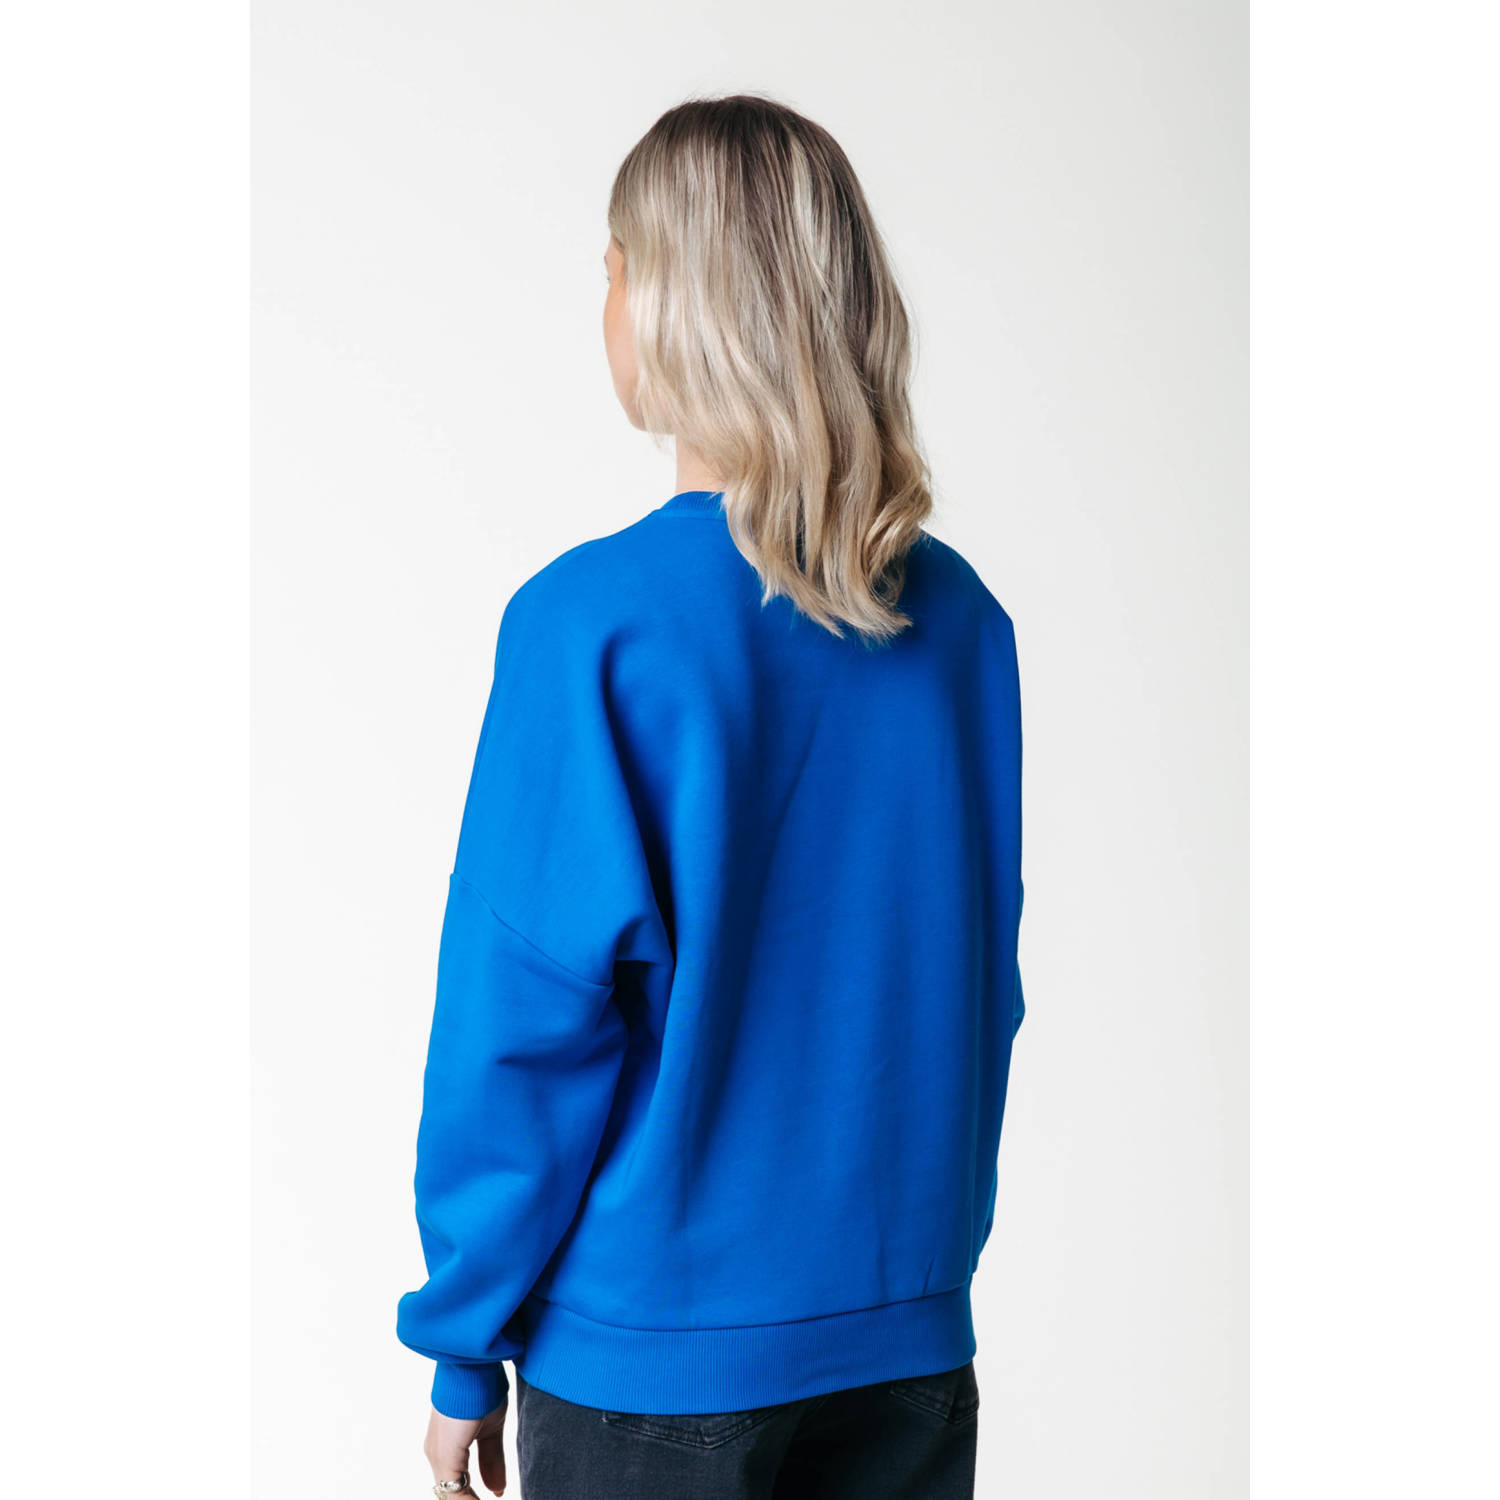 Colourful Rebel sweater Logo Wave met printopdruk blauw